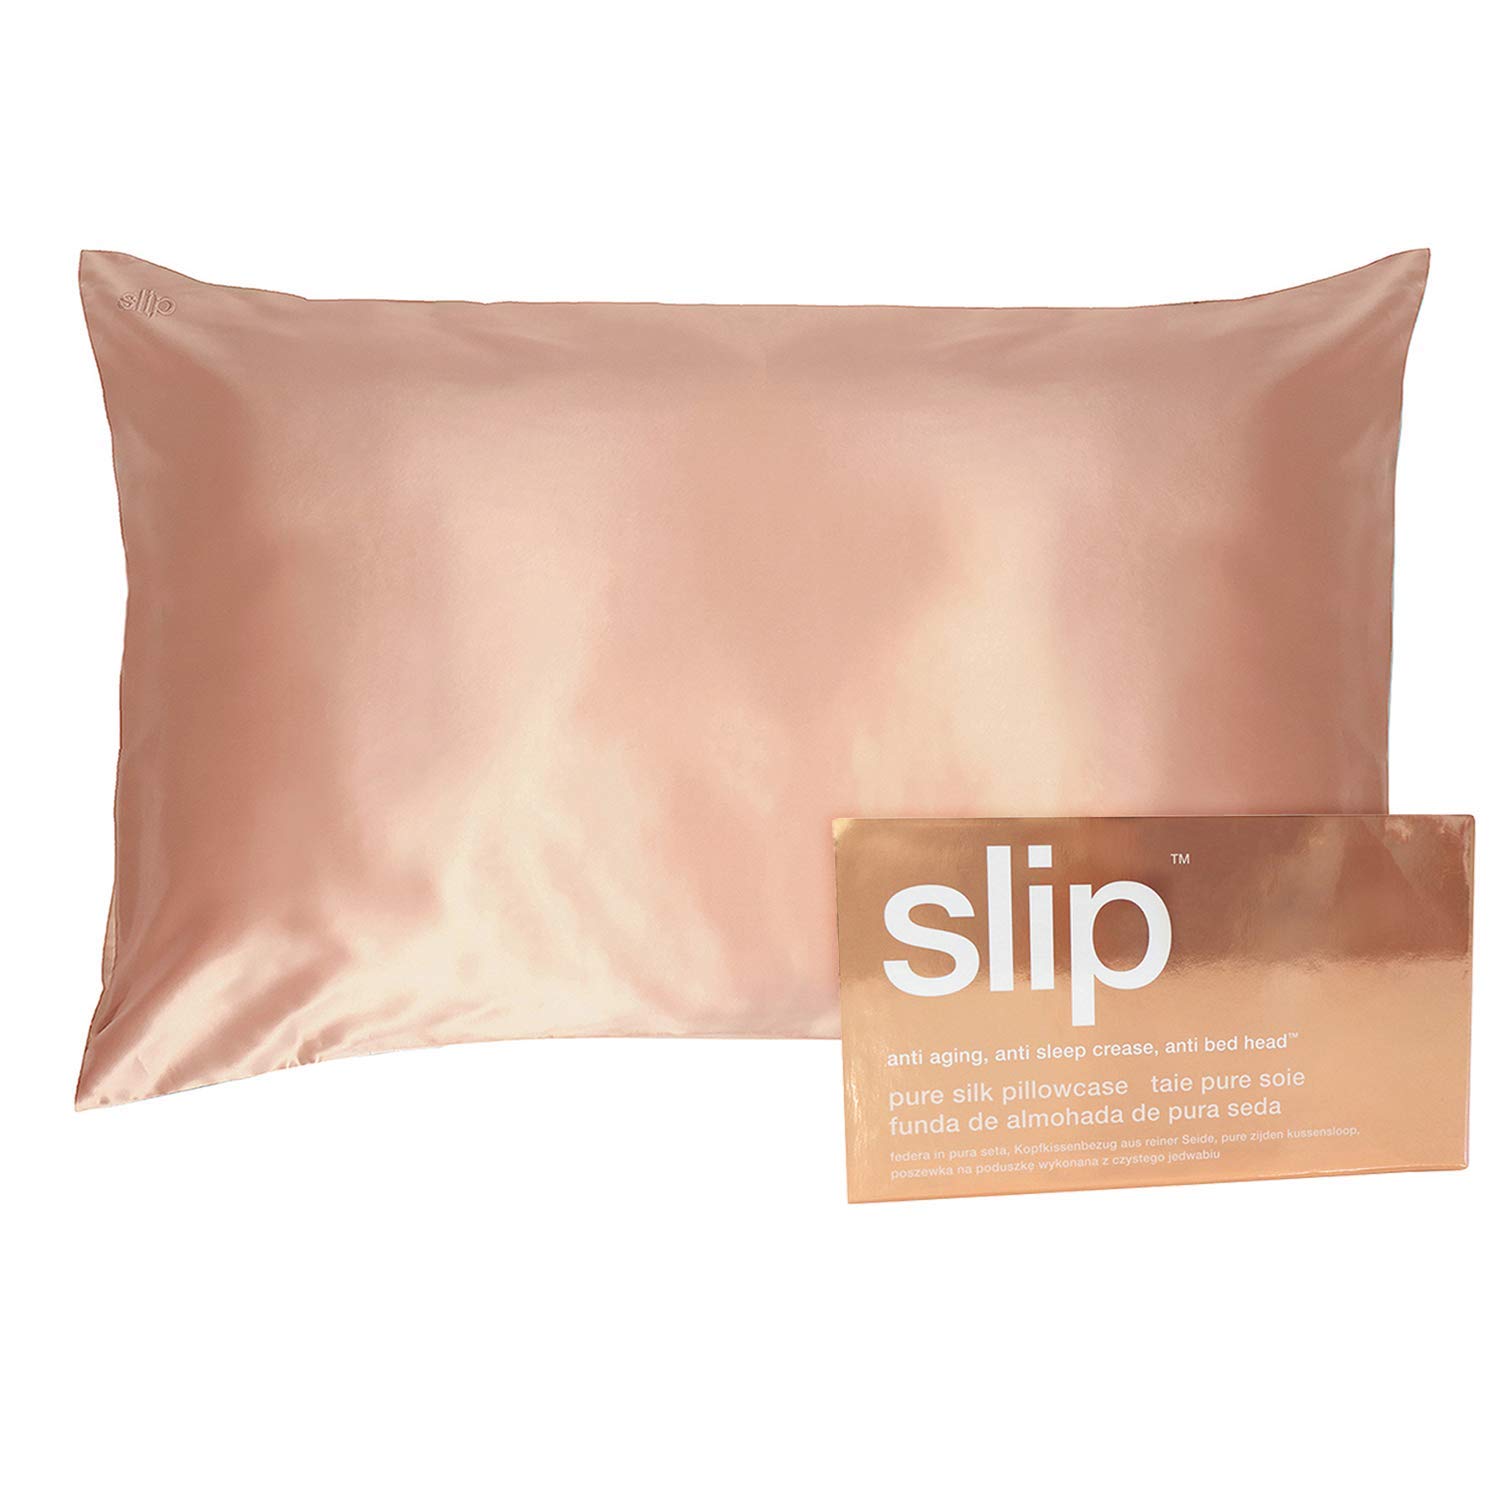 SLIP Silk King Pillowcase, Rose Gold (20" x 36") - 100% Pure 22 Momme Mulberry Silk Pillowcase - Anti-Aging, Anti-BedHead, Anti-Sleep Crease